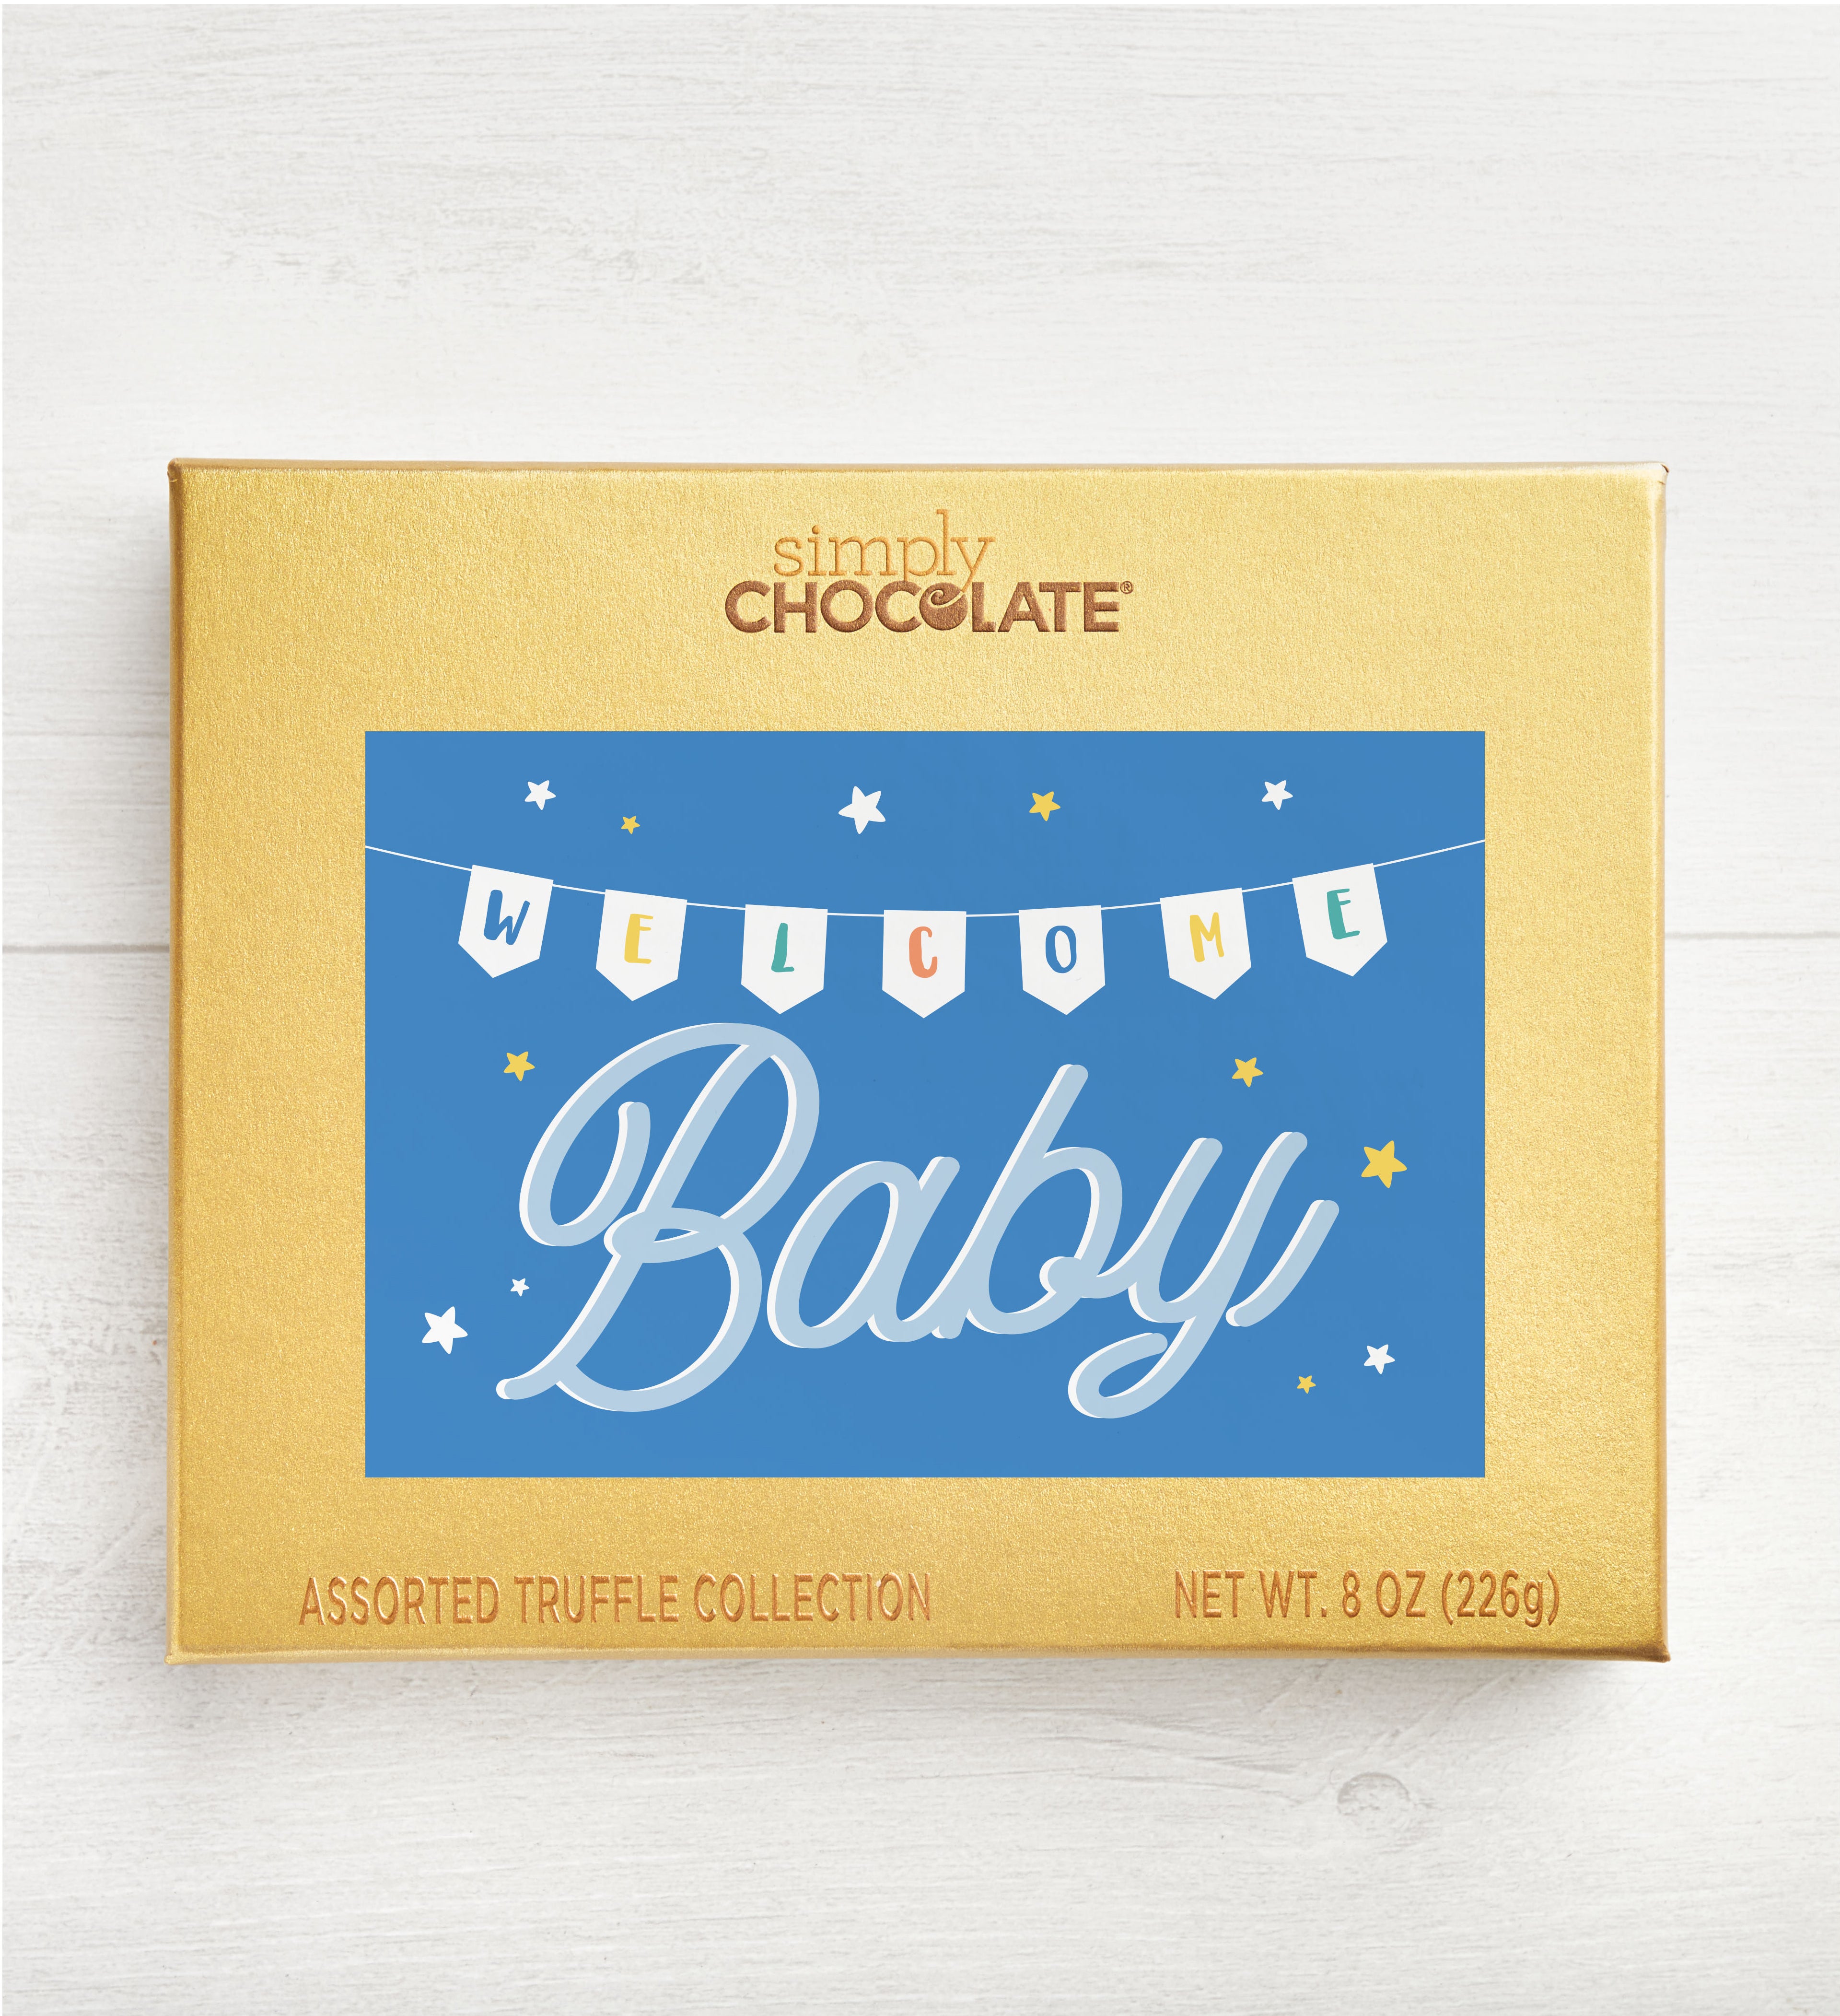 Welcome Baby Boy 17pc Chocolate Box